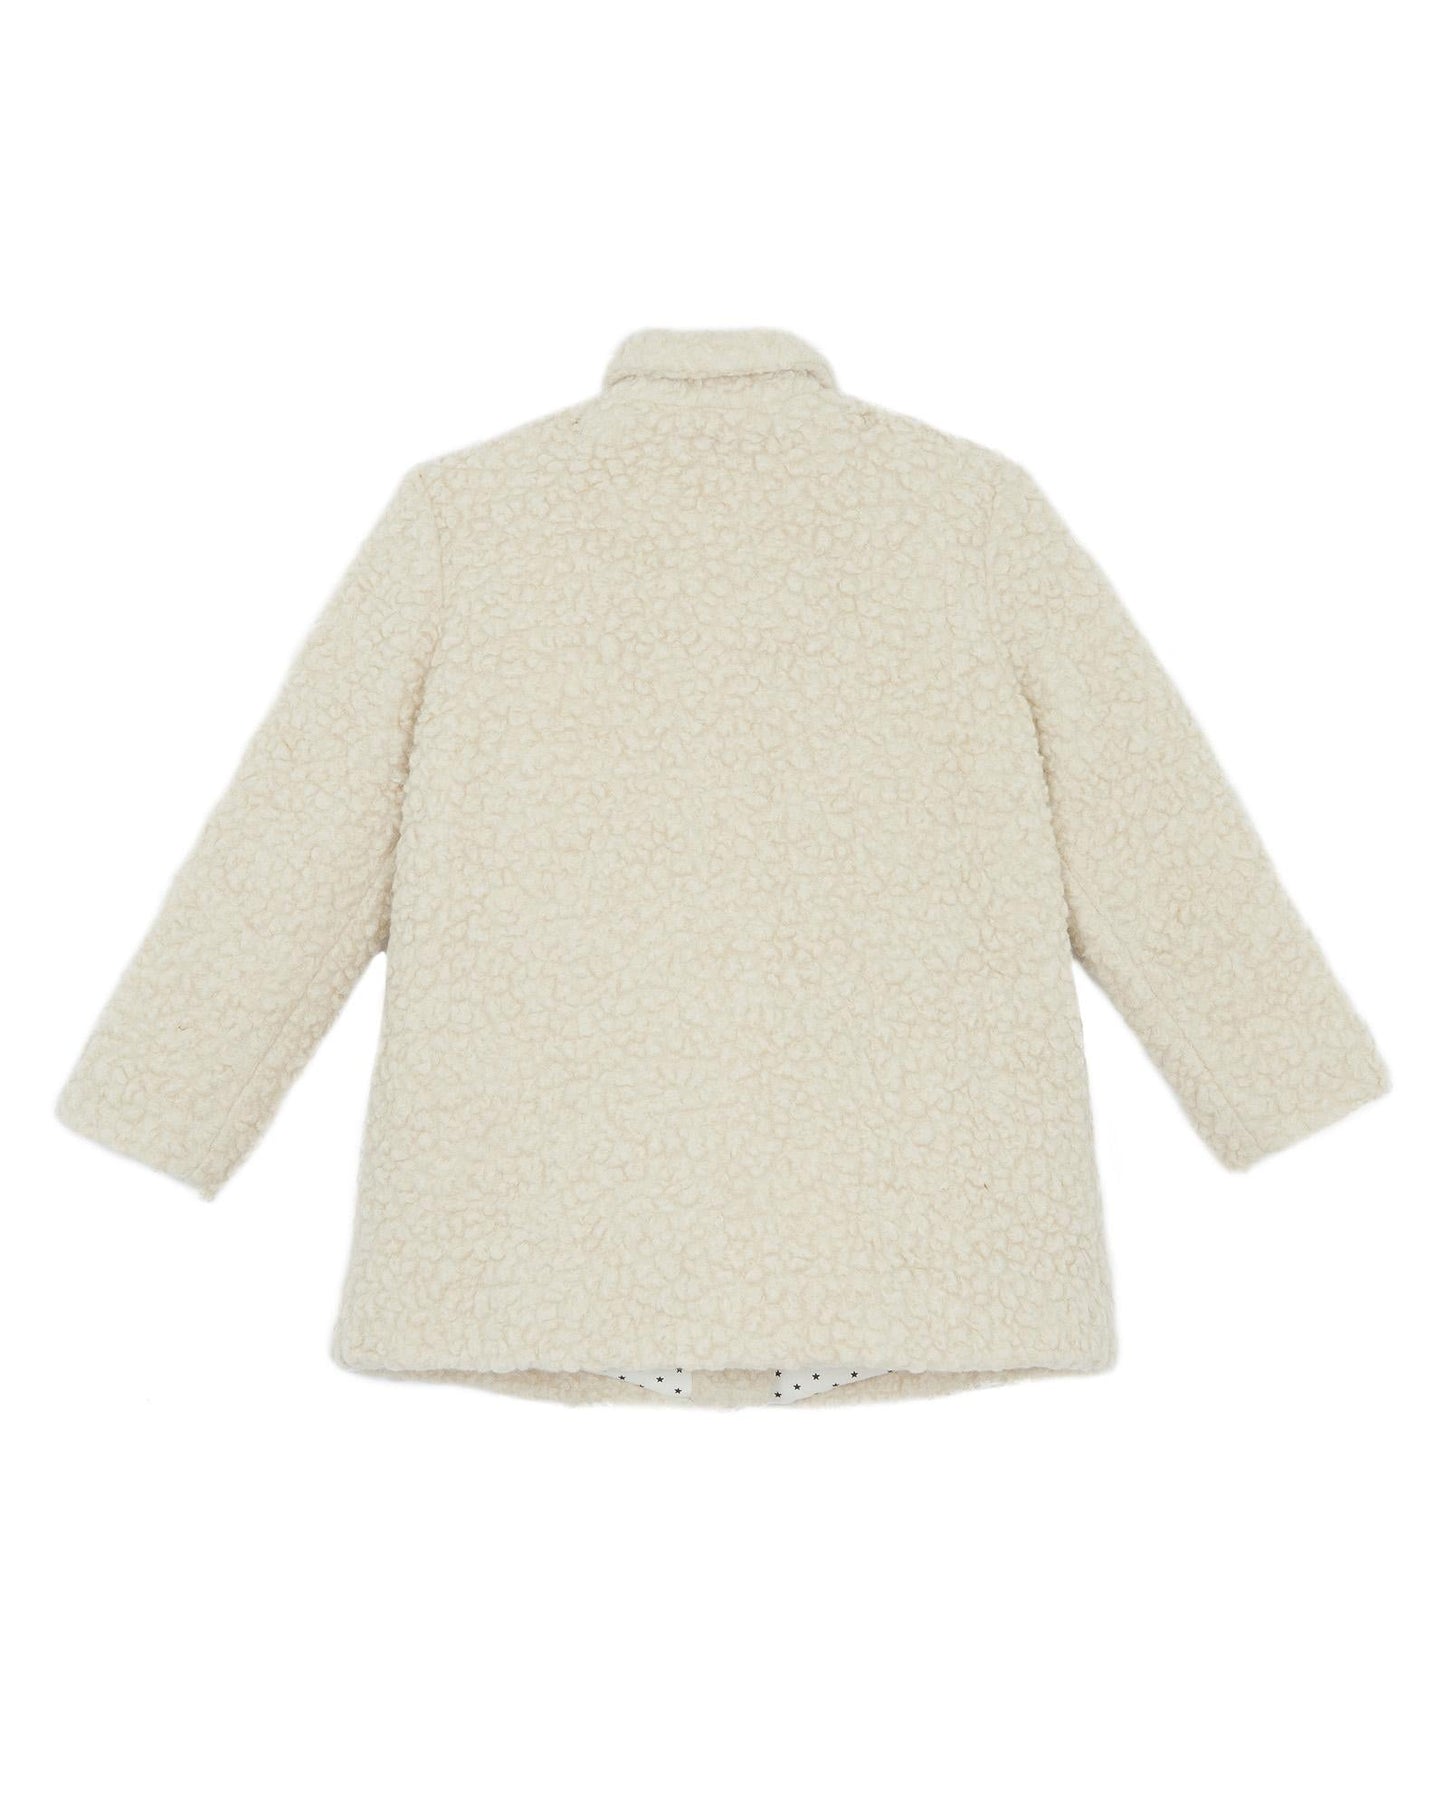 Coat - Suzanne Marron in woolen